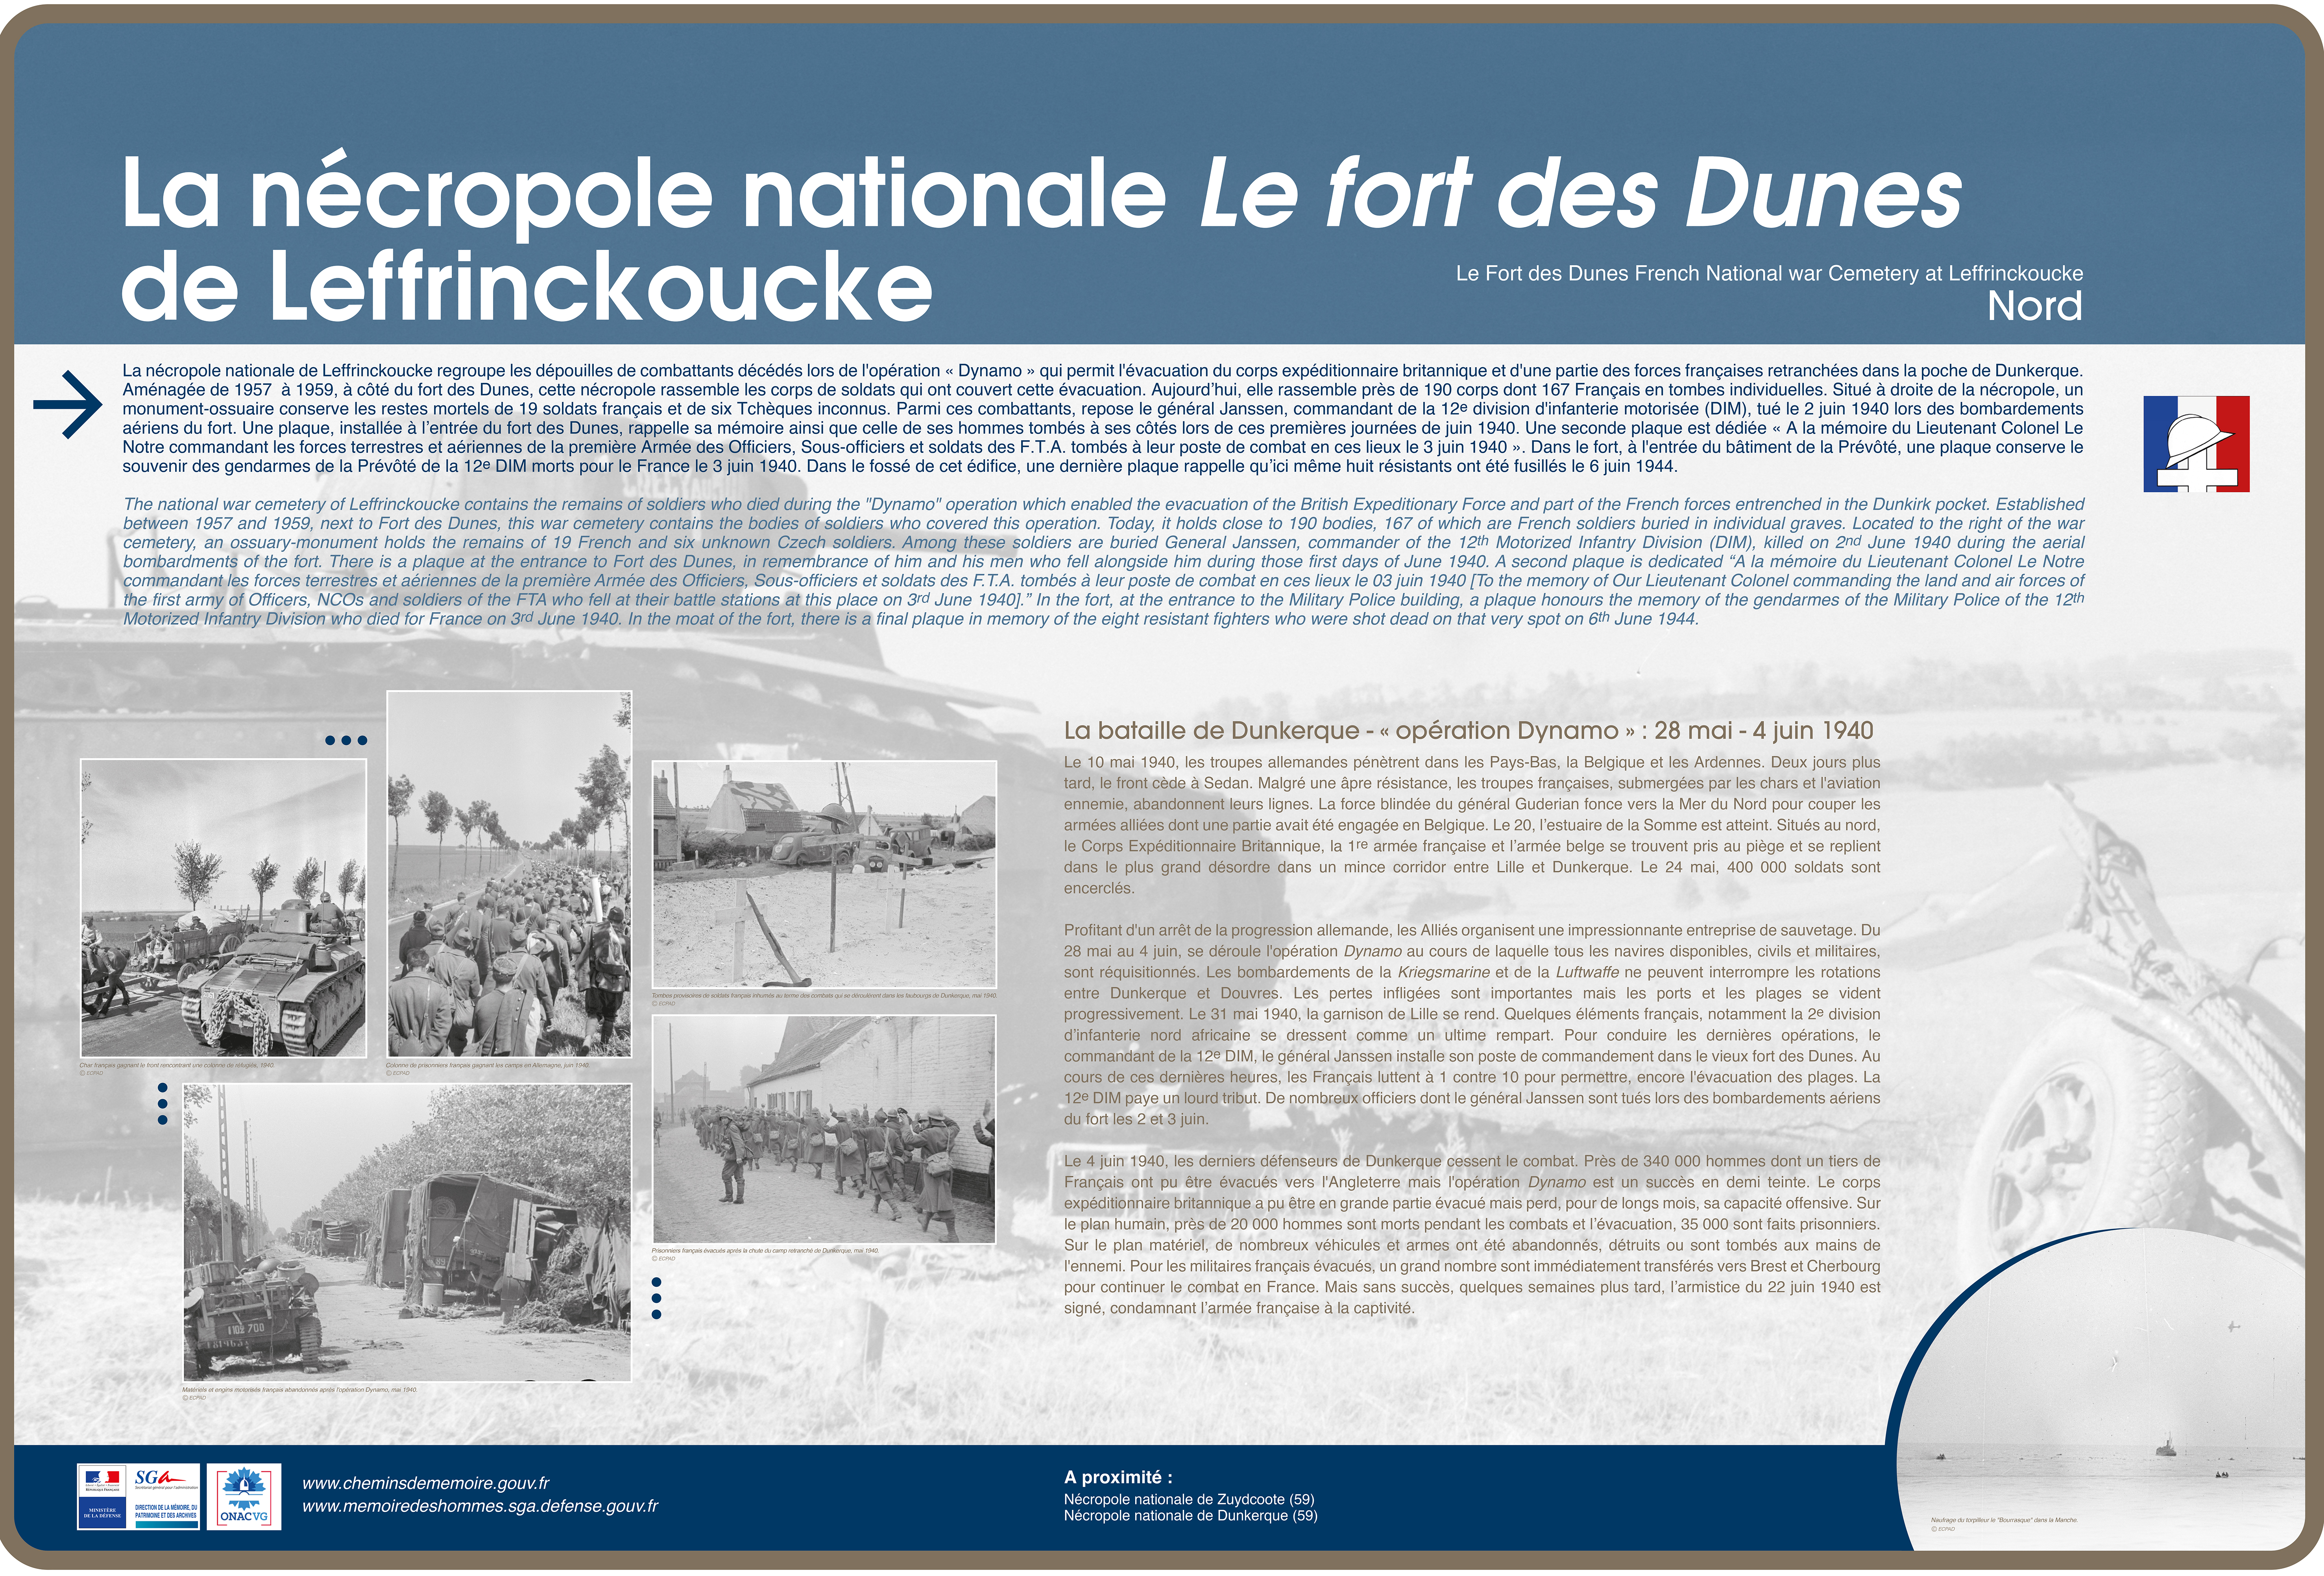 Official Plaque of the Local French Consulate Consulat De La